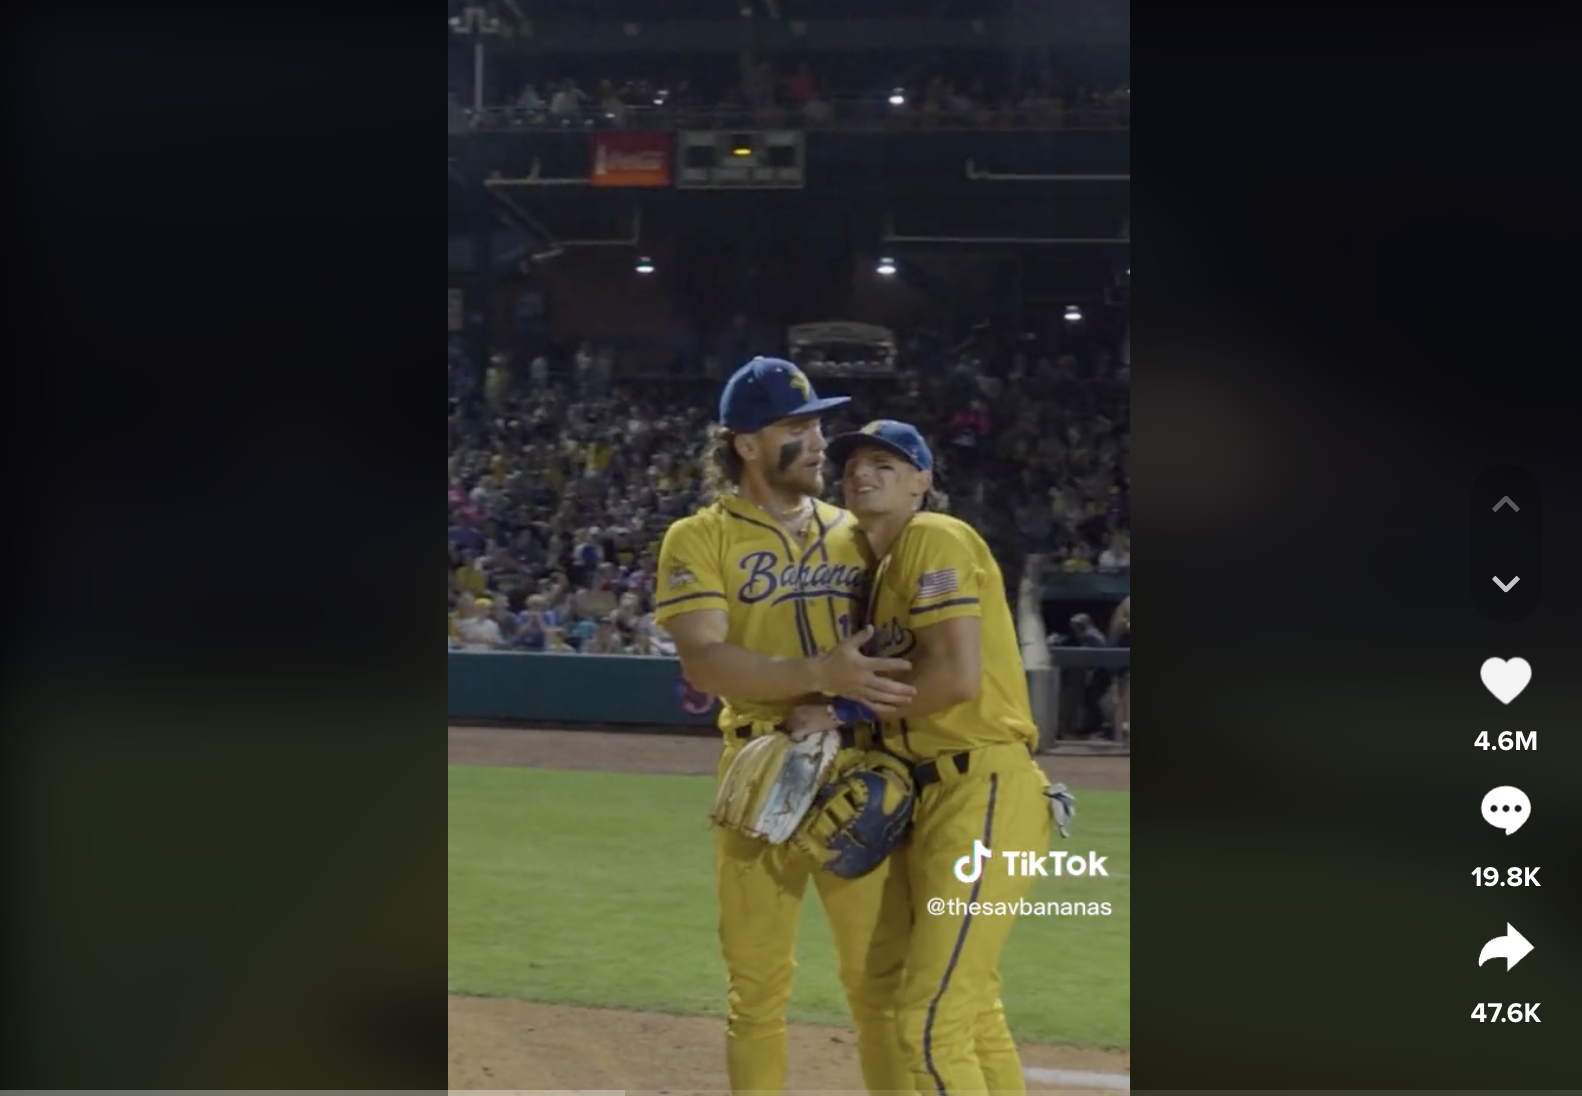 Screenshot of two savannah bananas players hugging